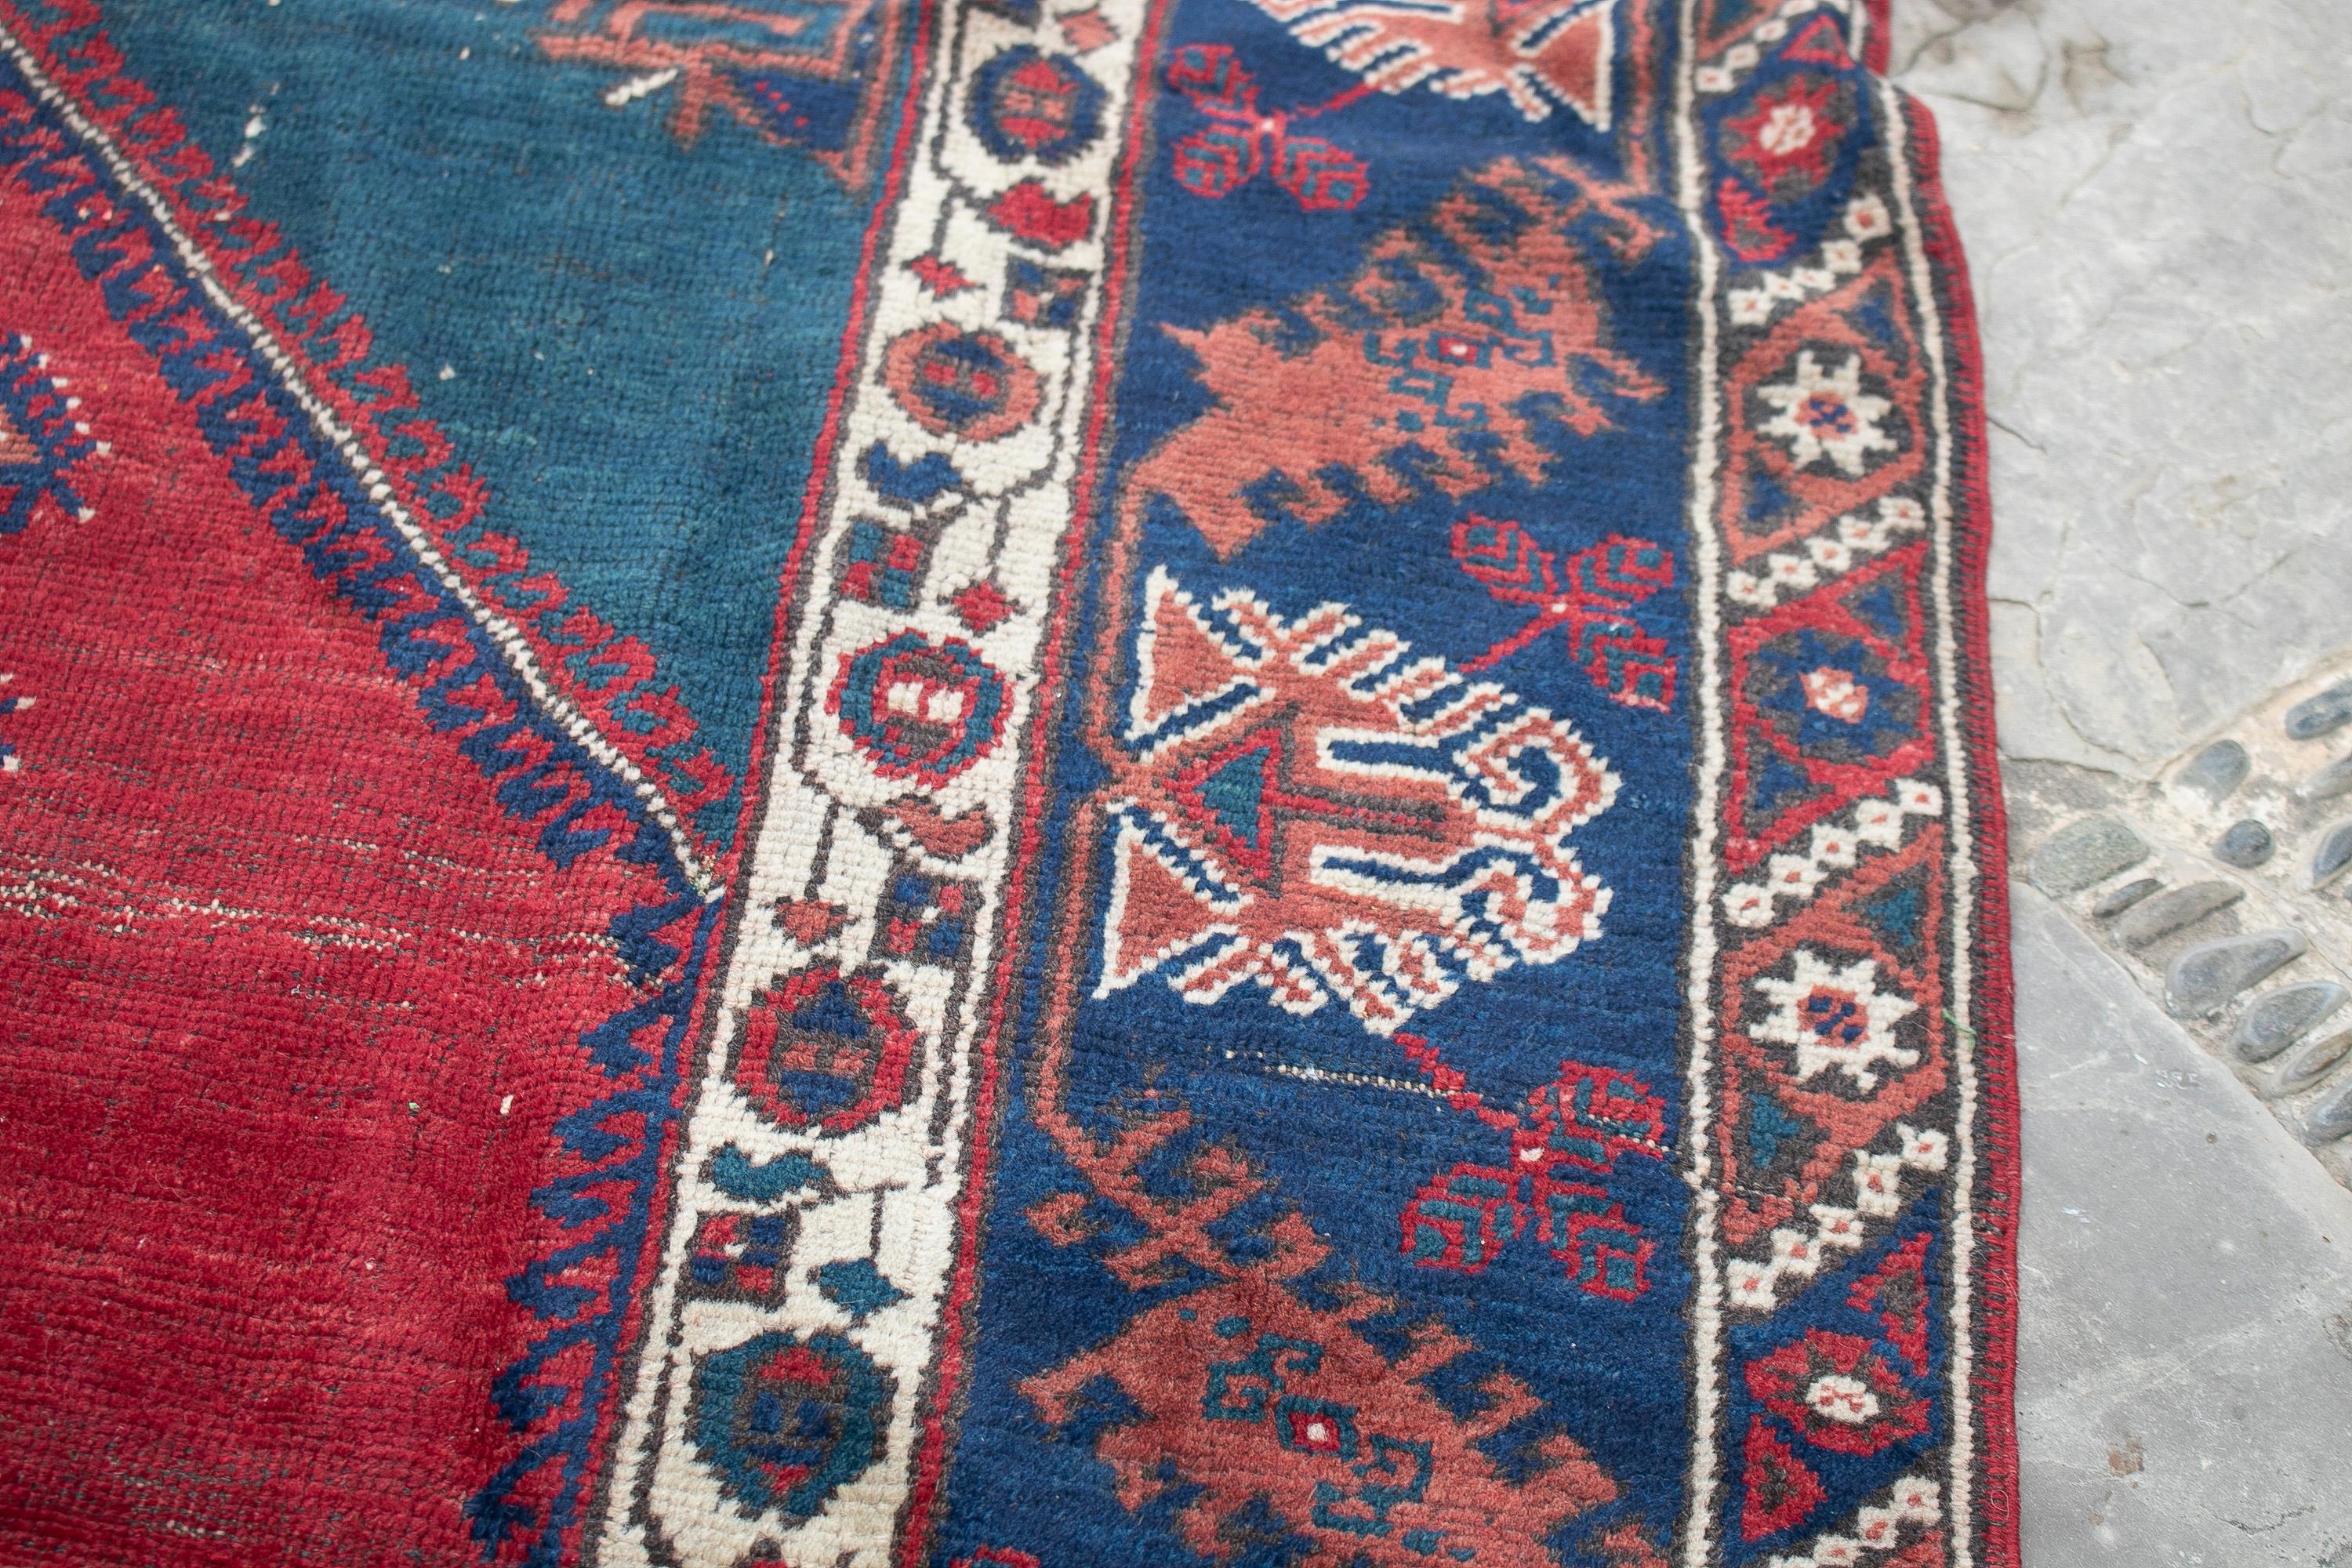 19th Century Turkish Kilim Wool Carpet Rug For Sale 2